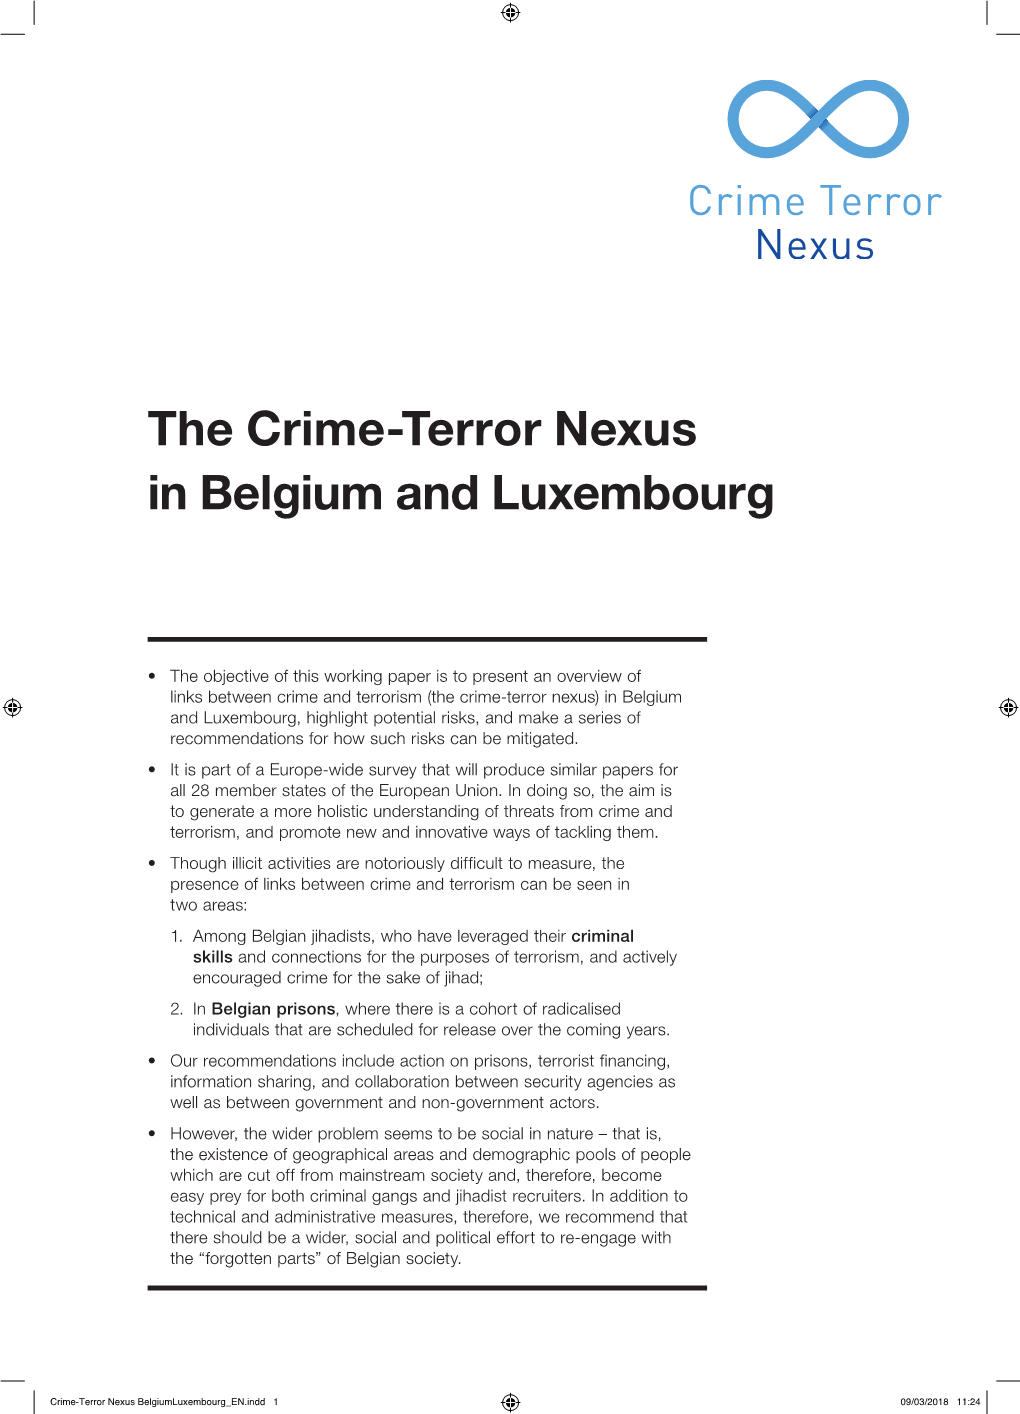 The Crime-Terror Nexus in Belgium and Luxembourg